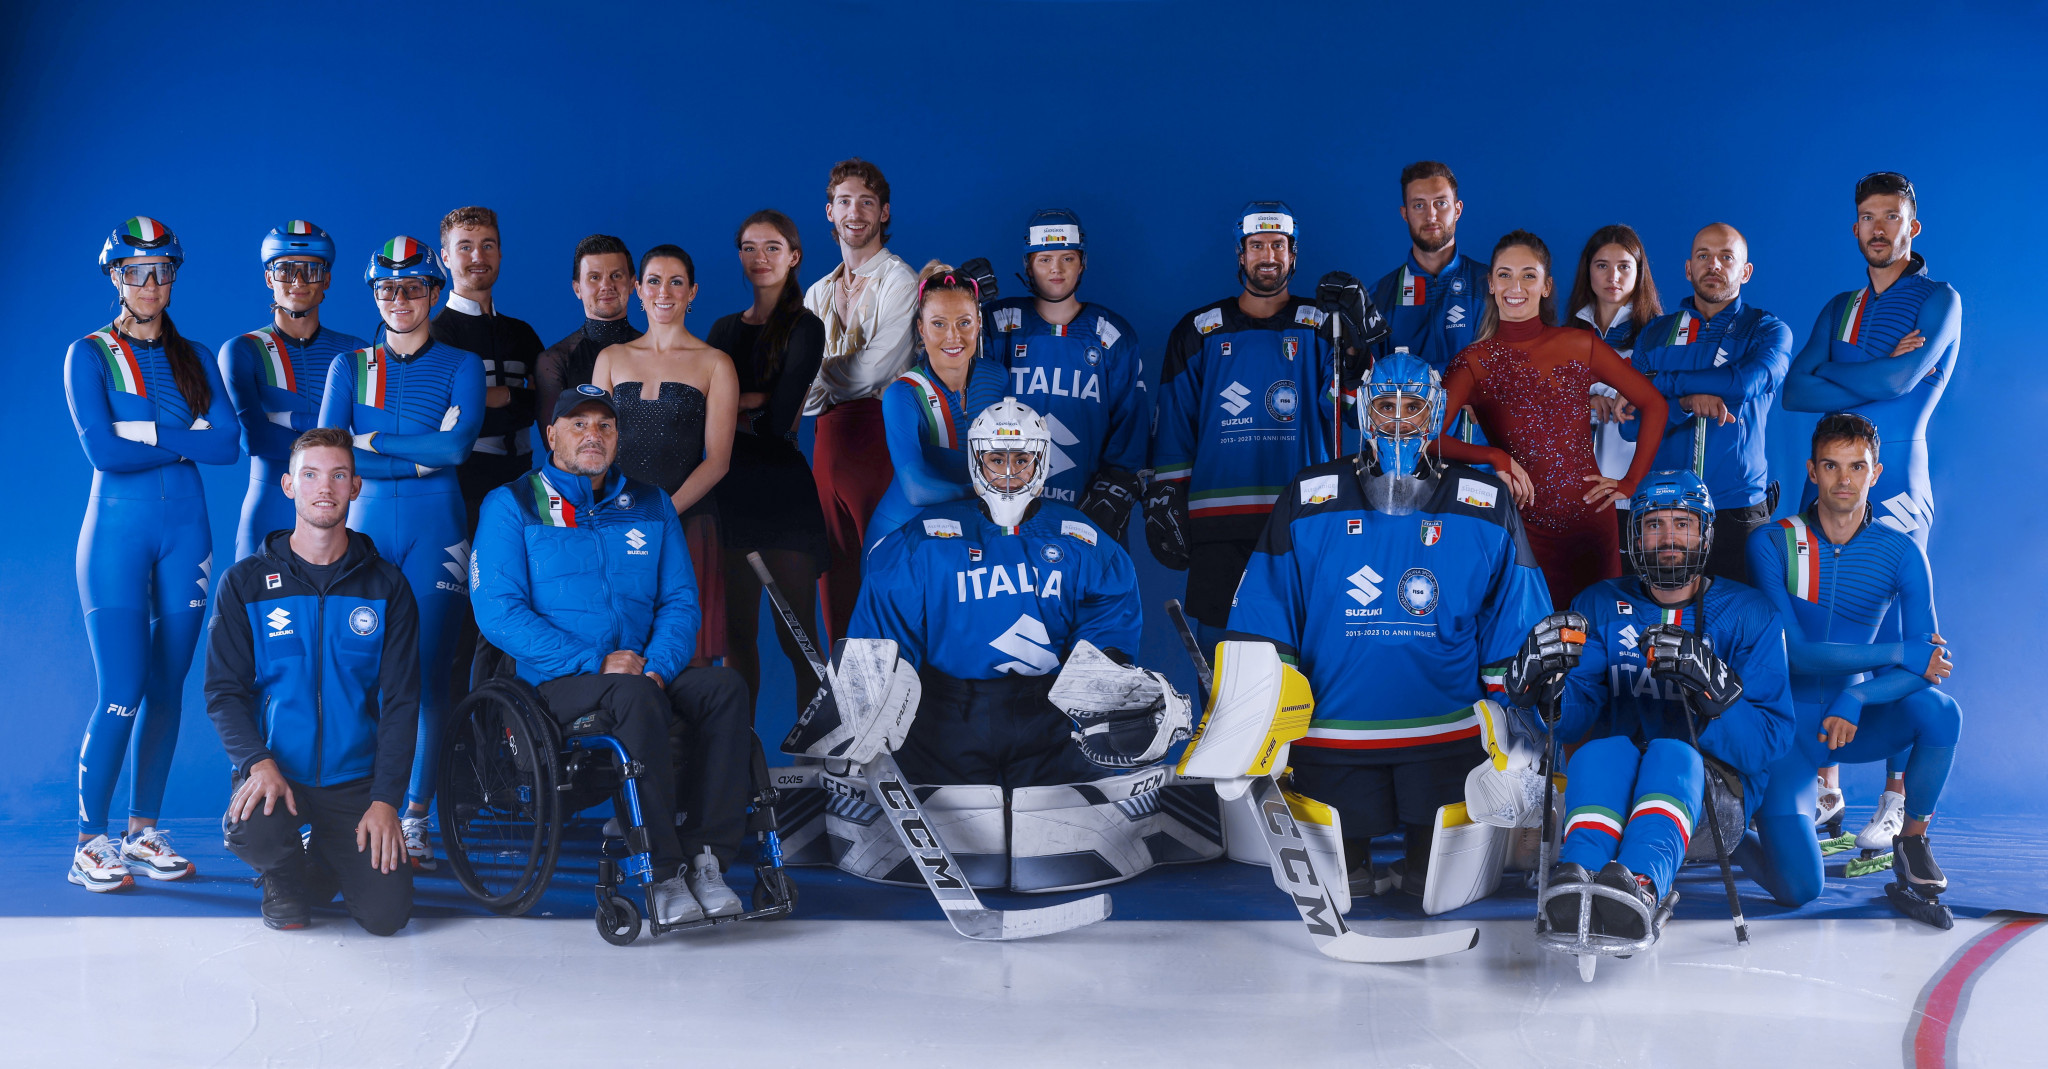 The eleventh collaboration with Italian sports brand FILA